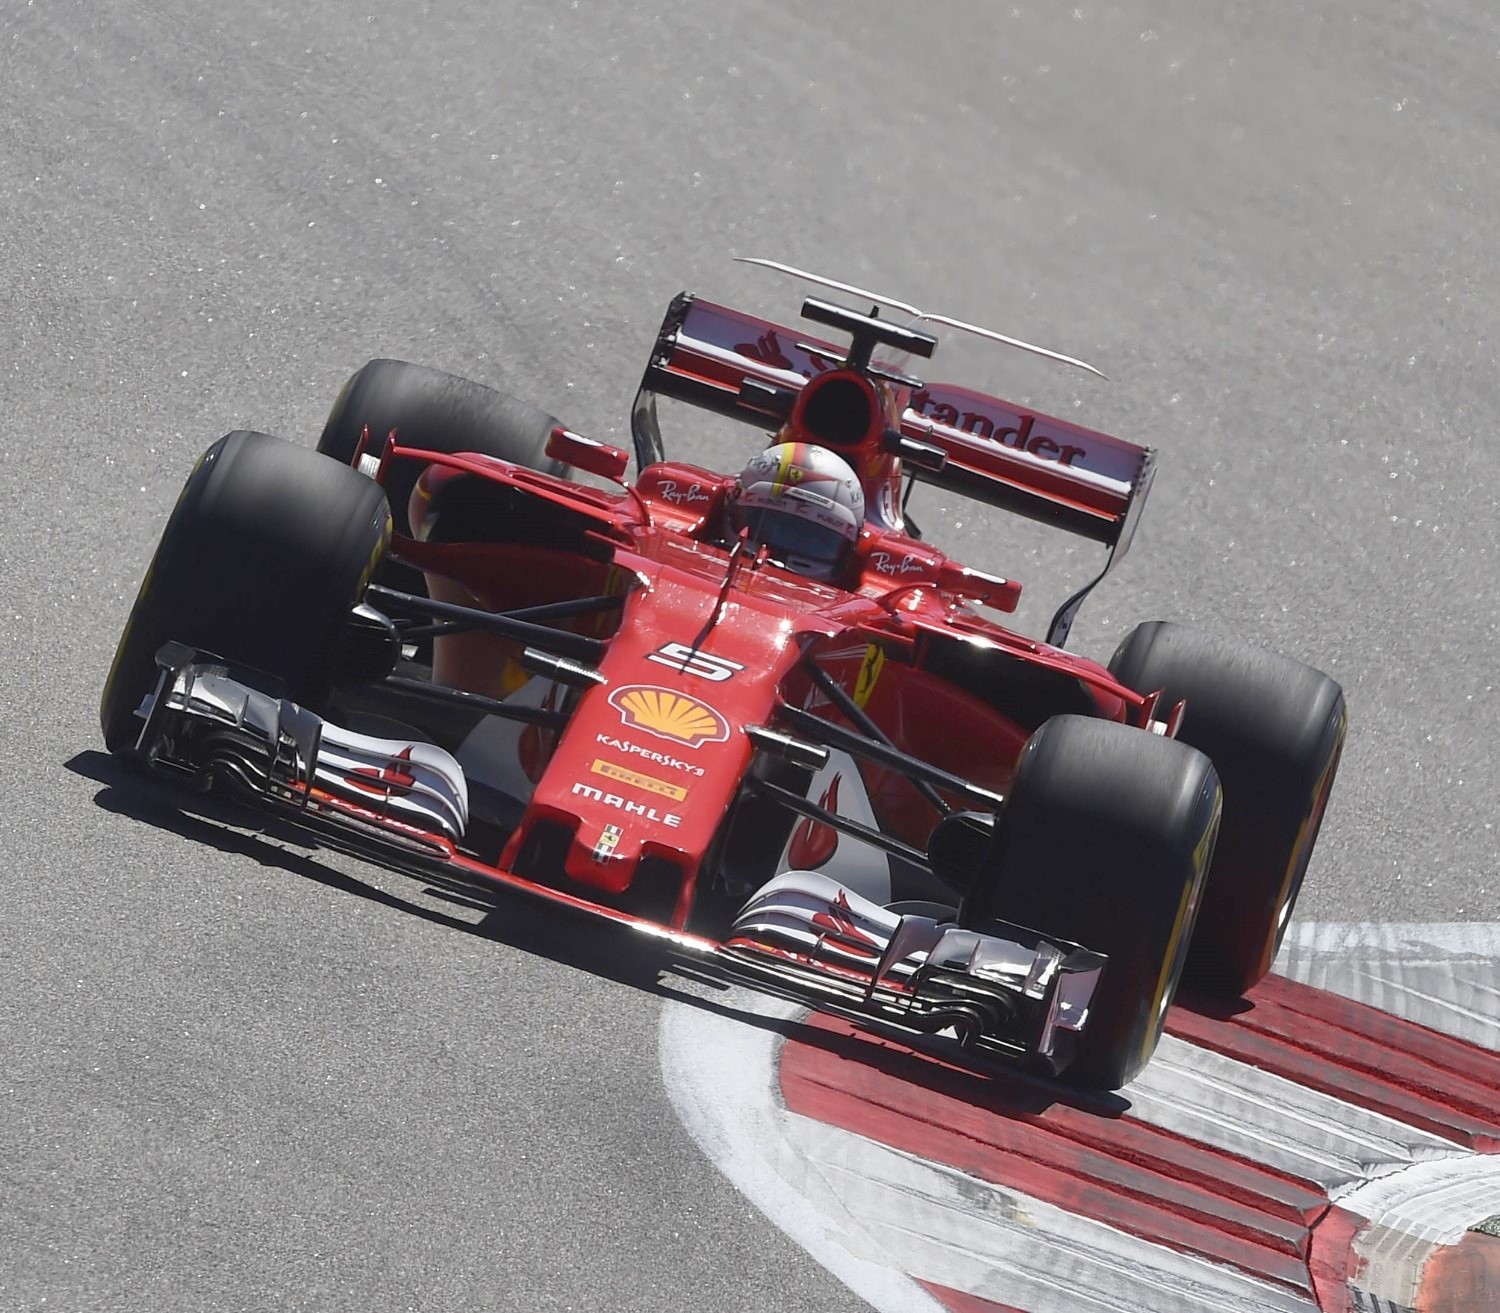 Is Ferrari really ahead?